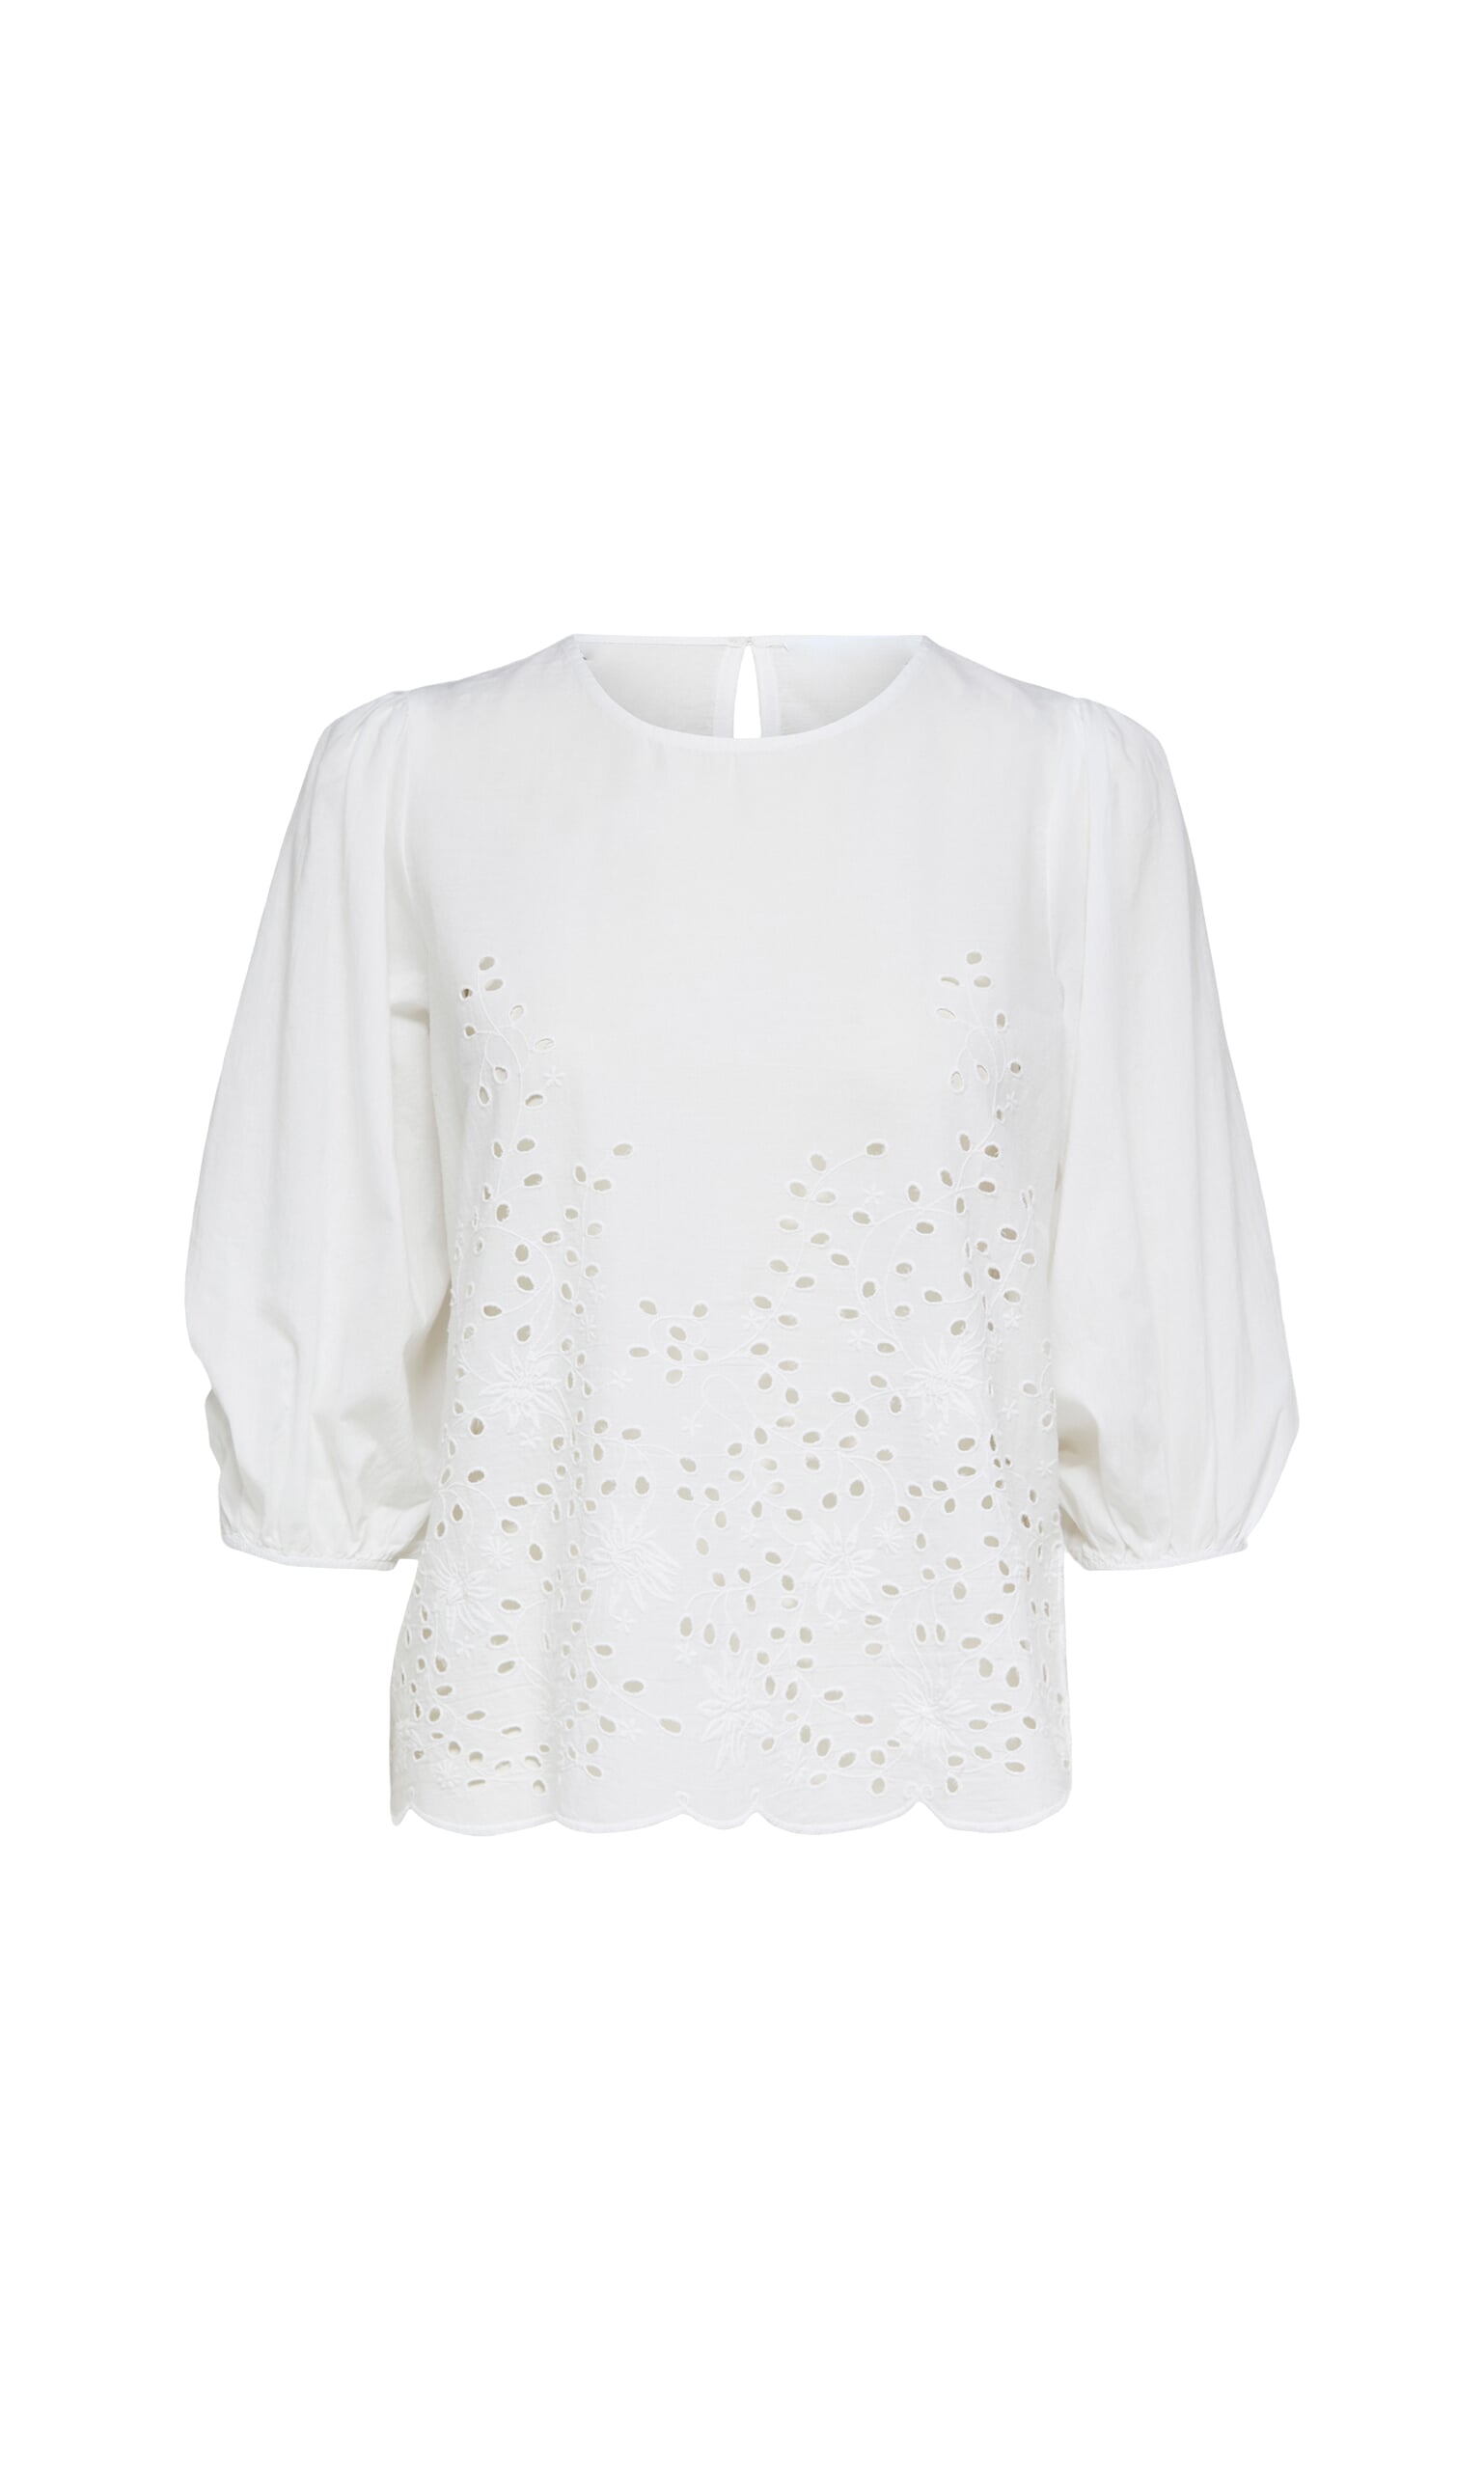 Broderie blouse - Plümo Ltd